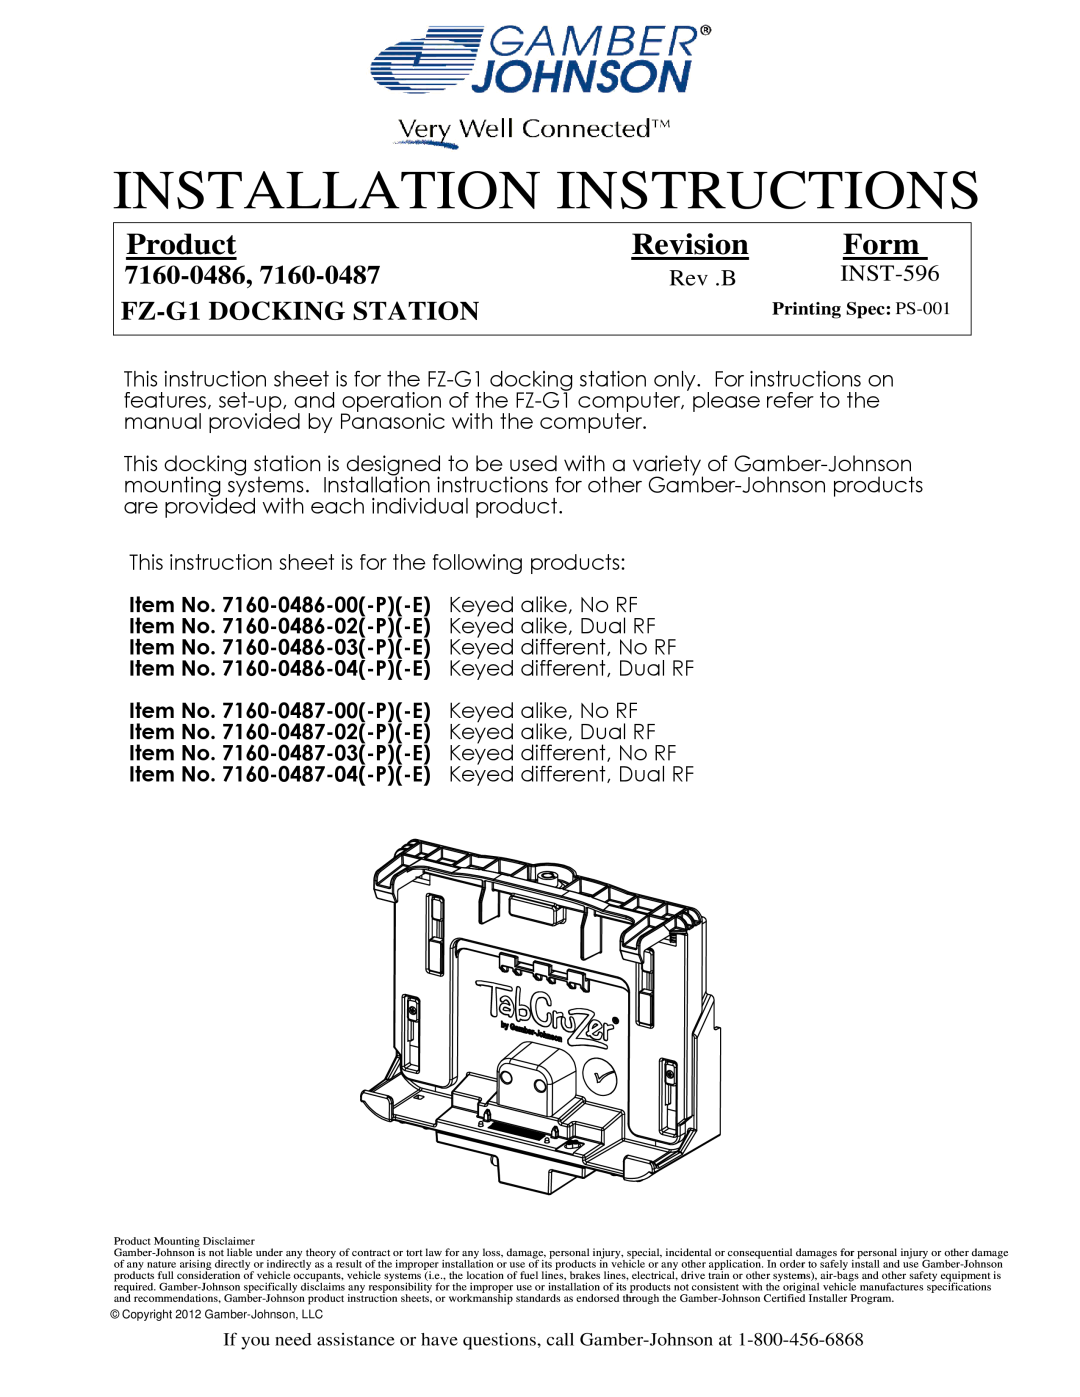 Gamber Johnson 7160-0486 installation instructions Installation Instructions, Product, Revision, Form, Rev .B, INST-596 